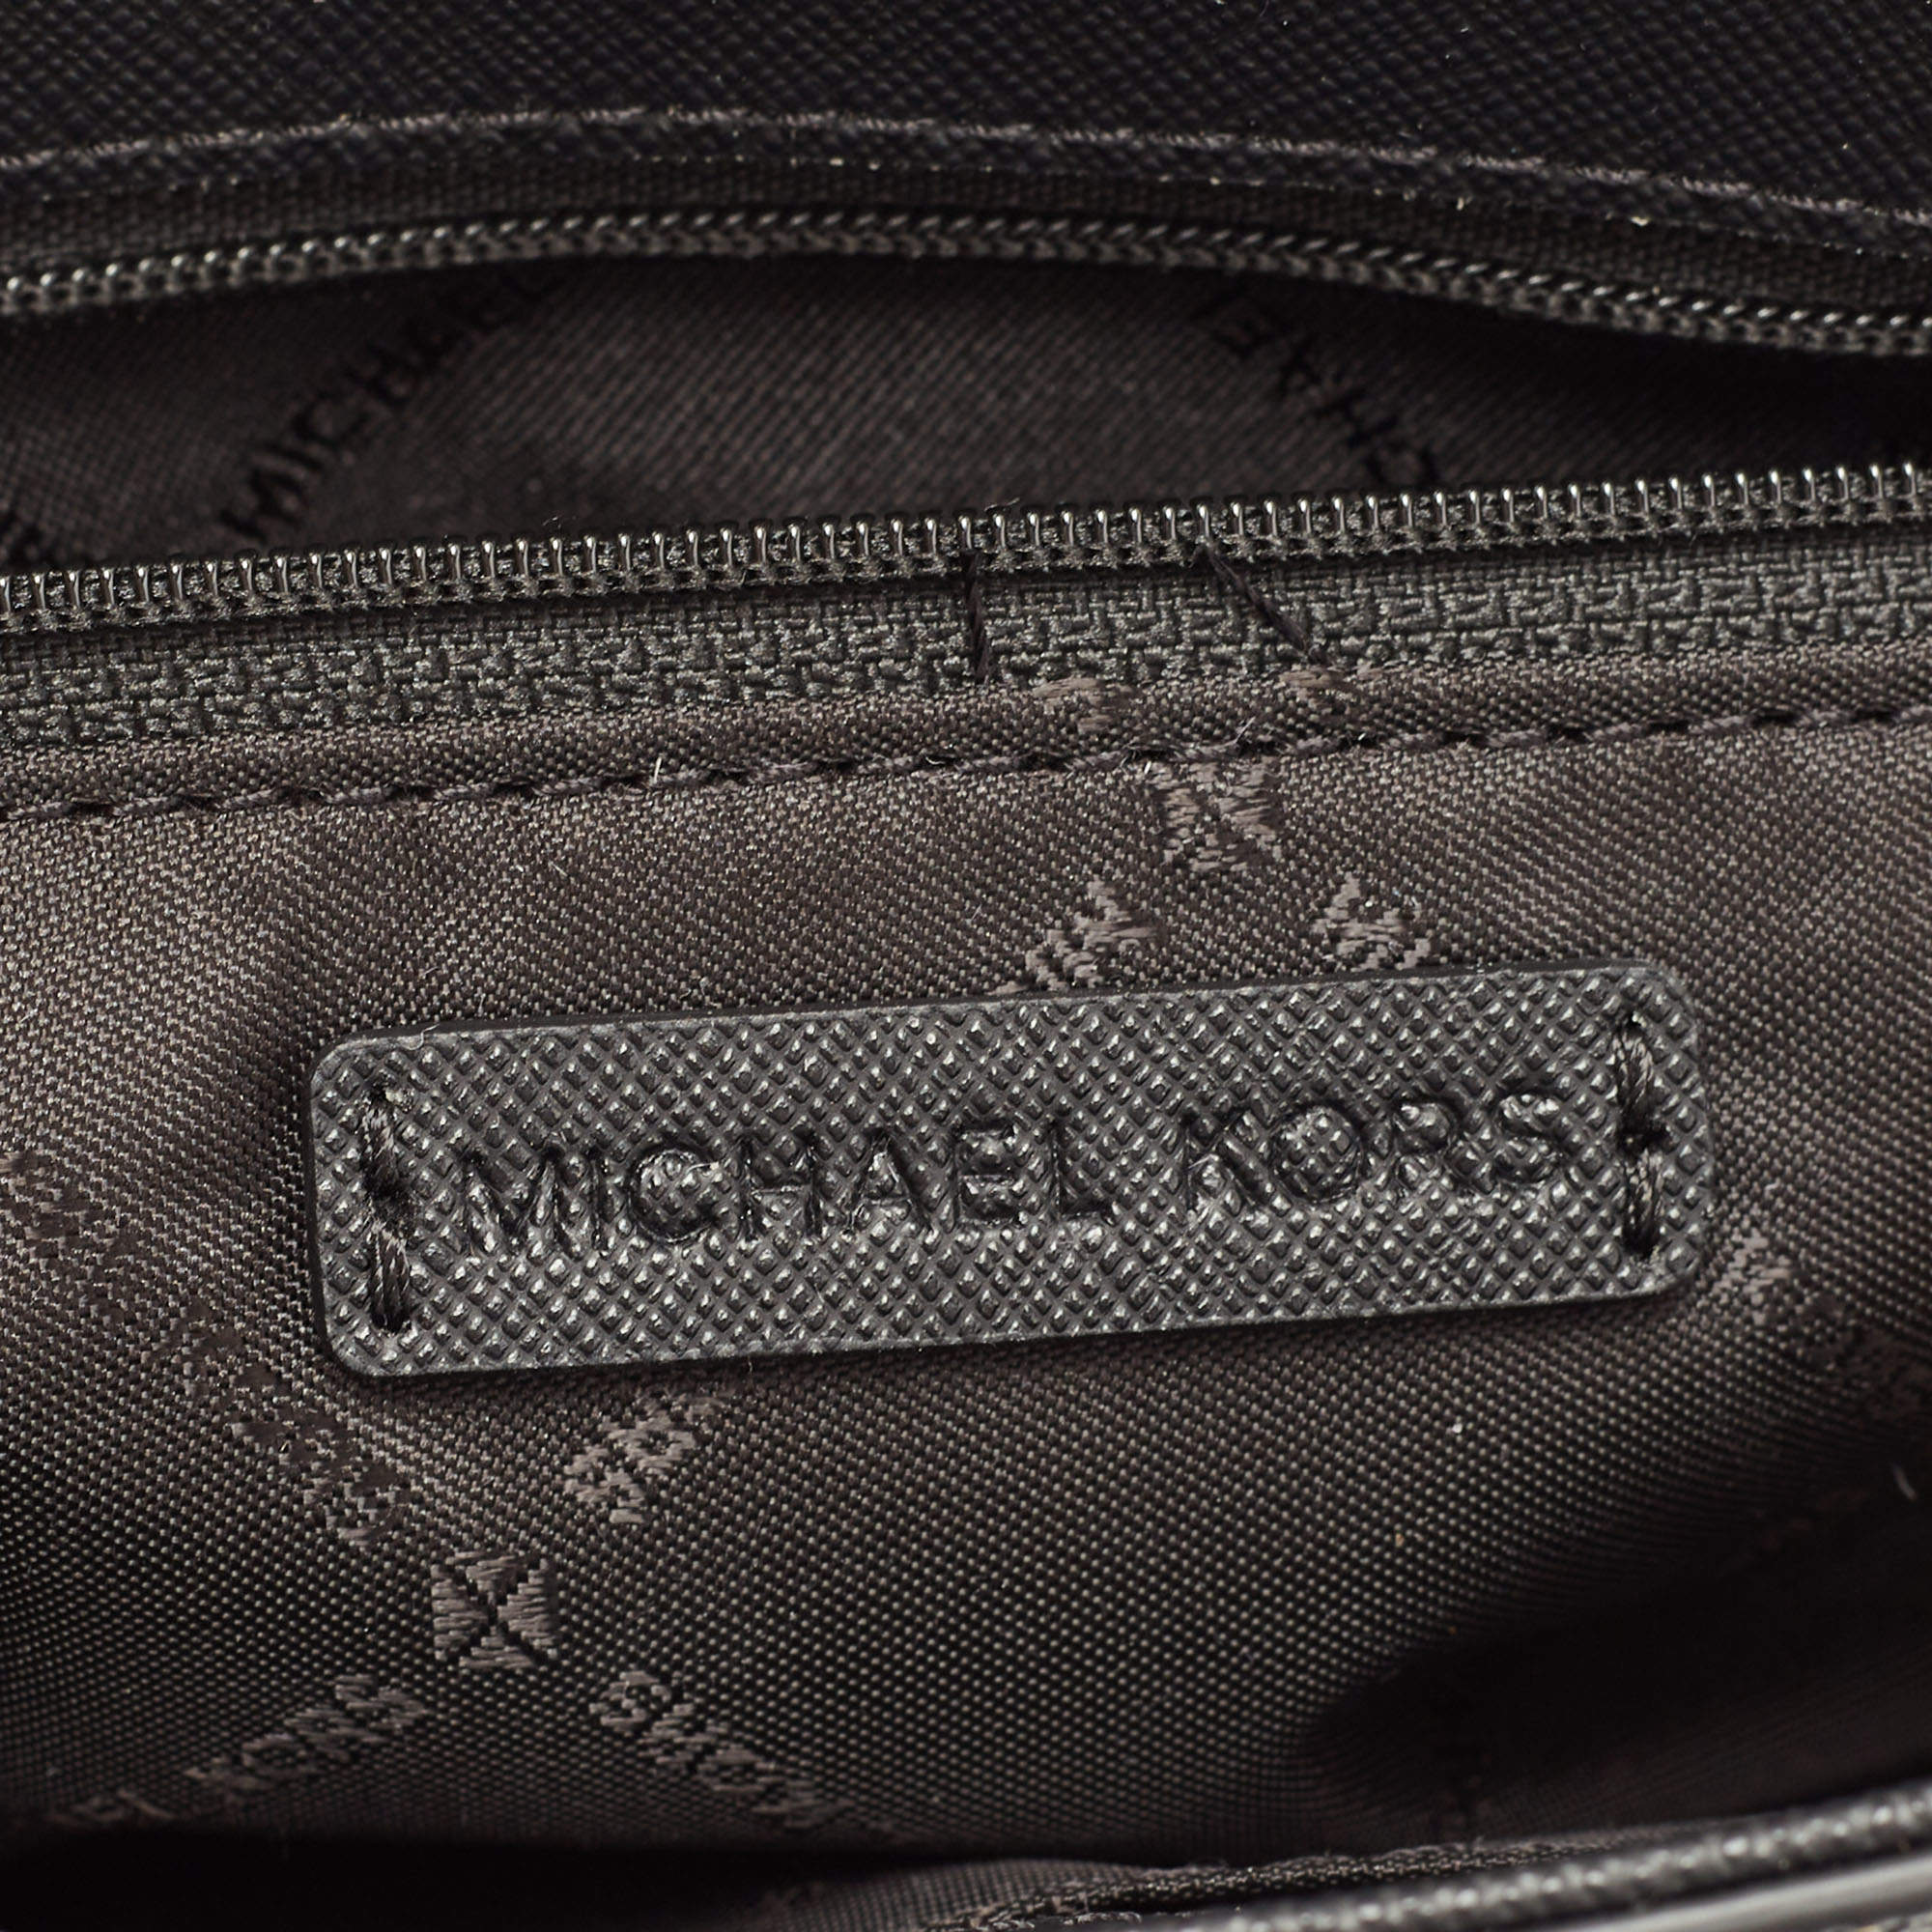 Michael Kors Medium Saffiano Leather Convertible Crossbody Bag in Black by  @springflingmnlph 